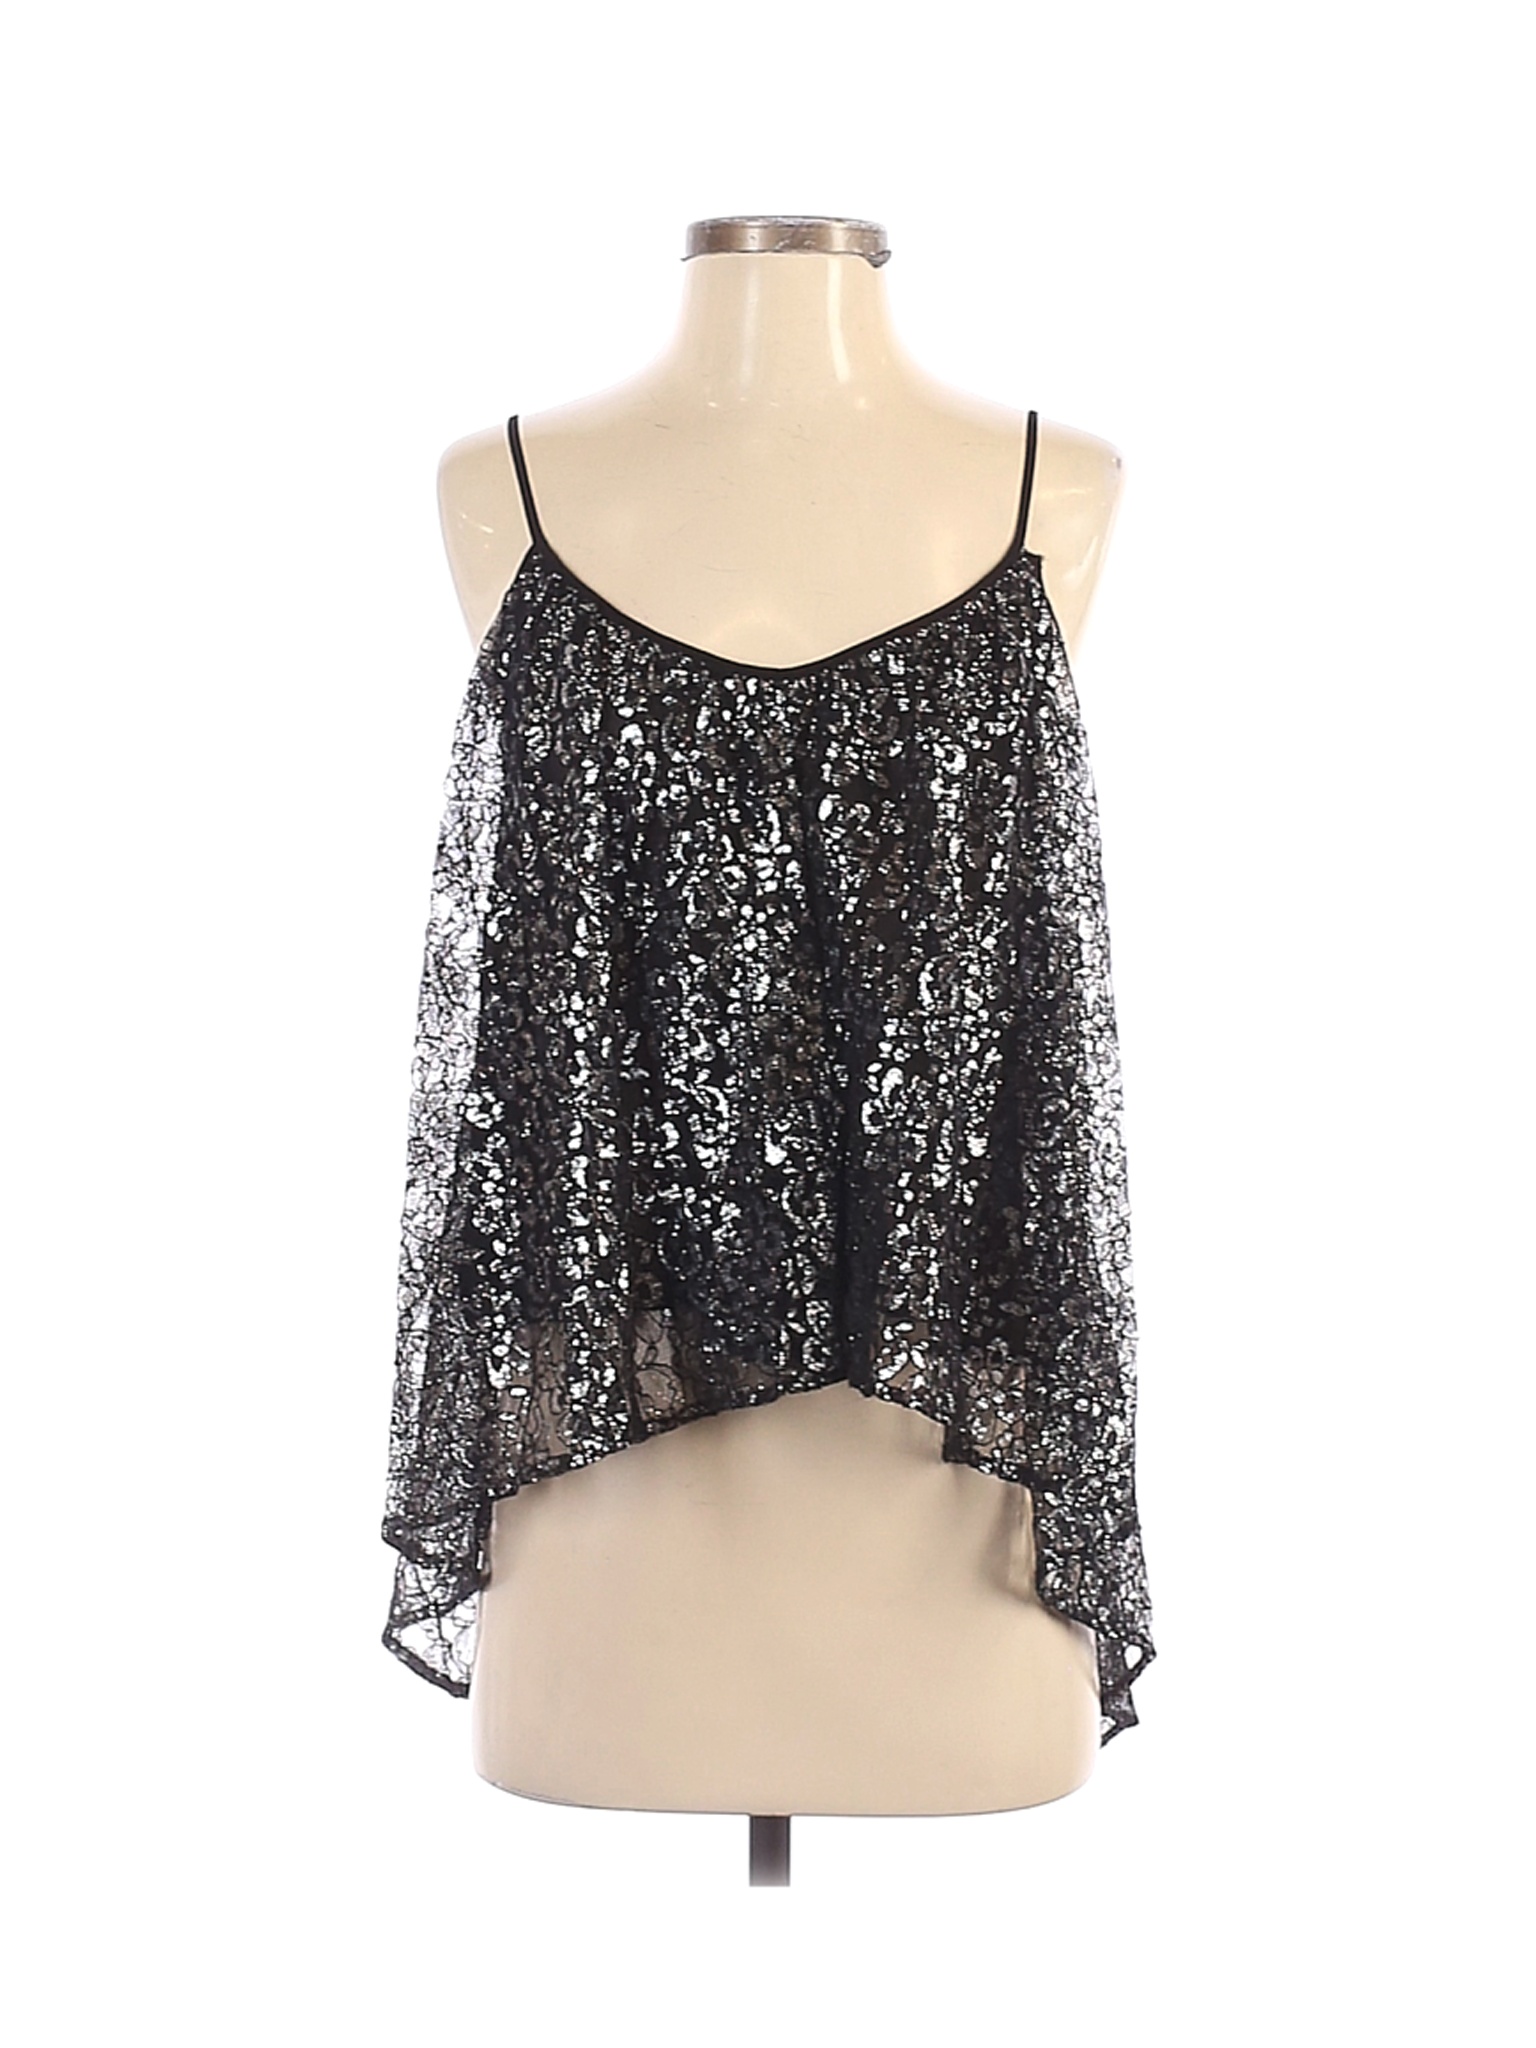 Zara Women Black Sleeveless Blouse S | eBay